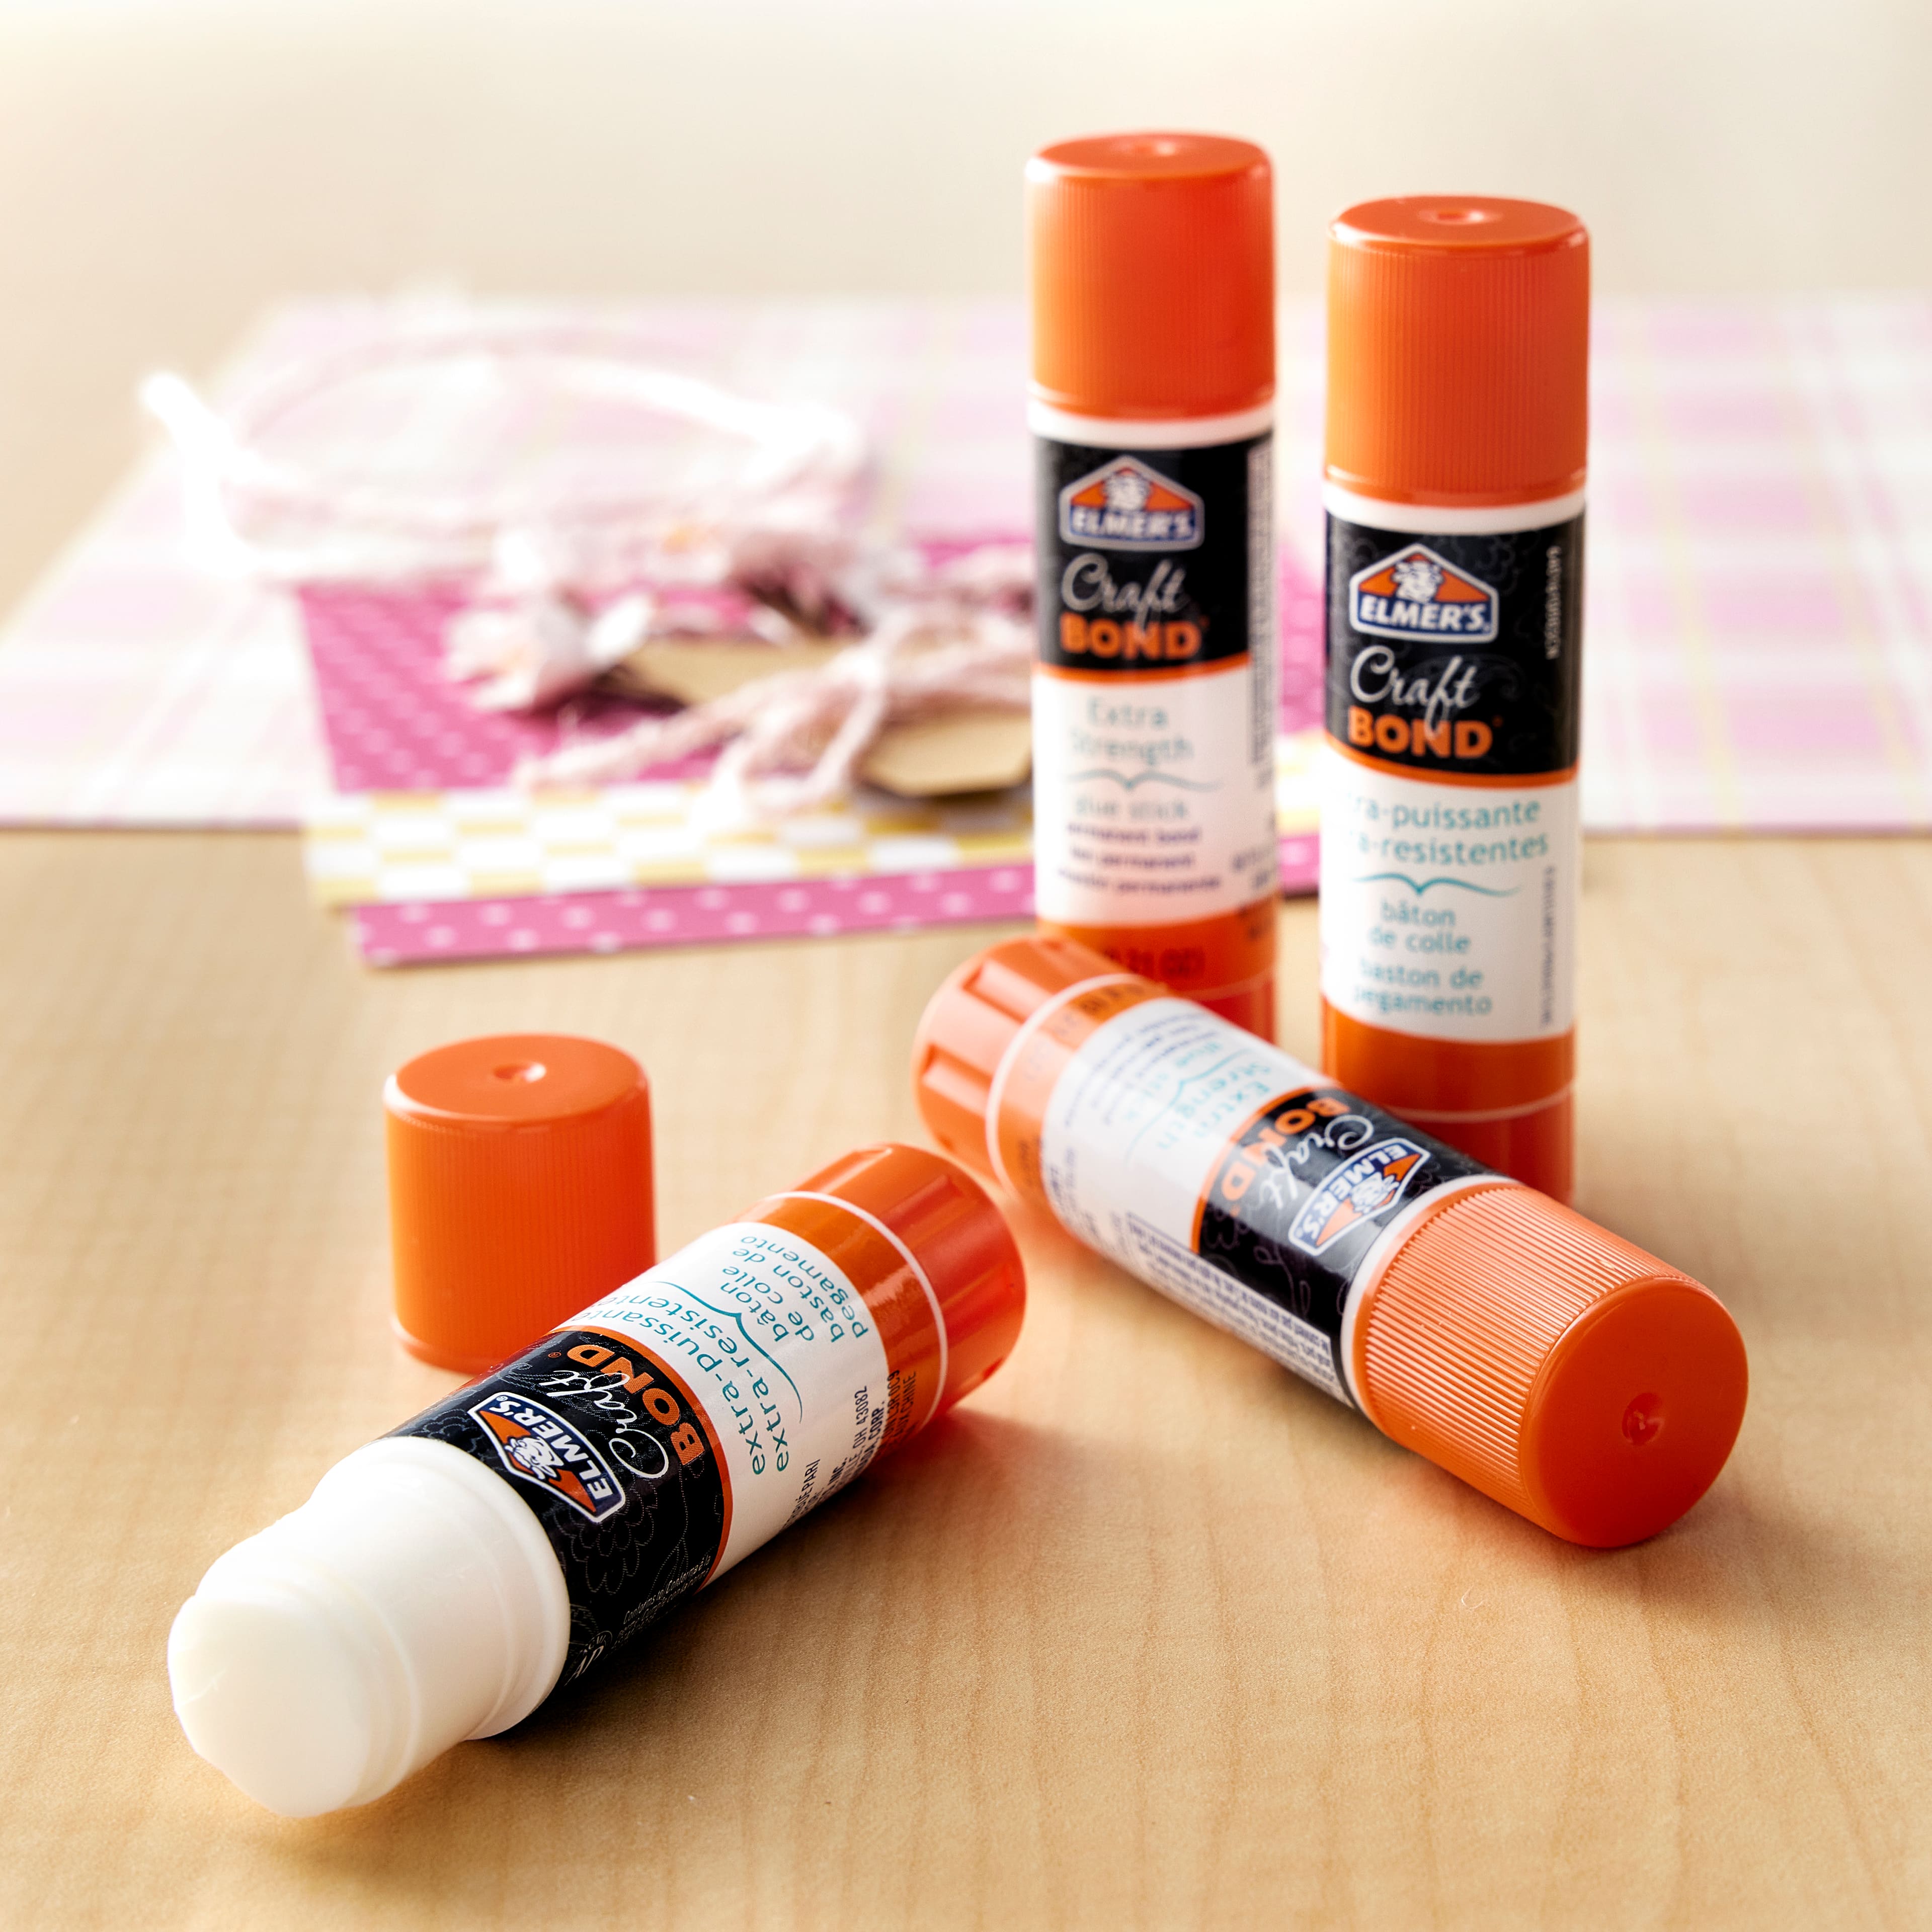 Elmer's CraftBond Less Mess All-Temp Glue Sticks - Each